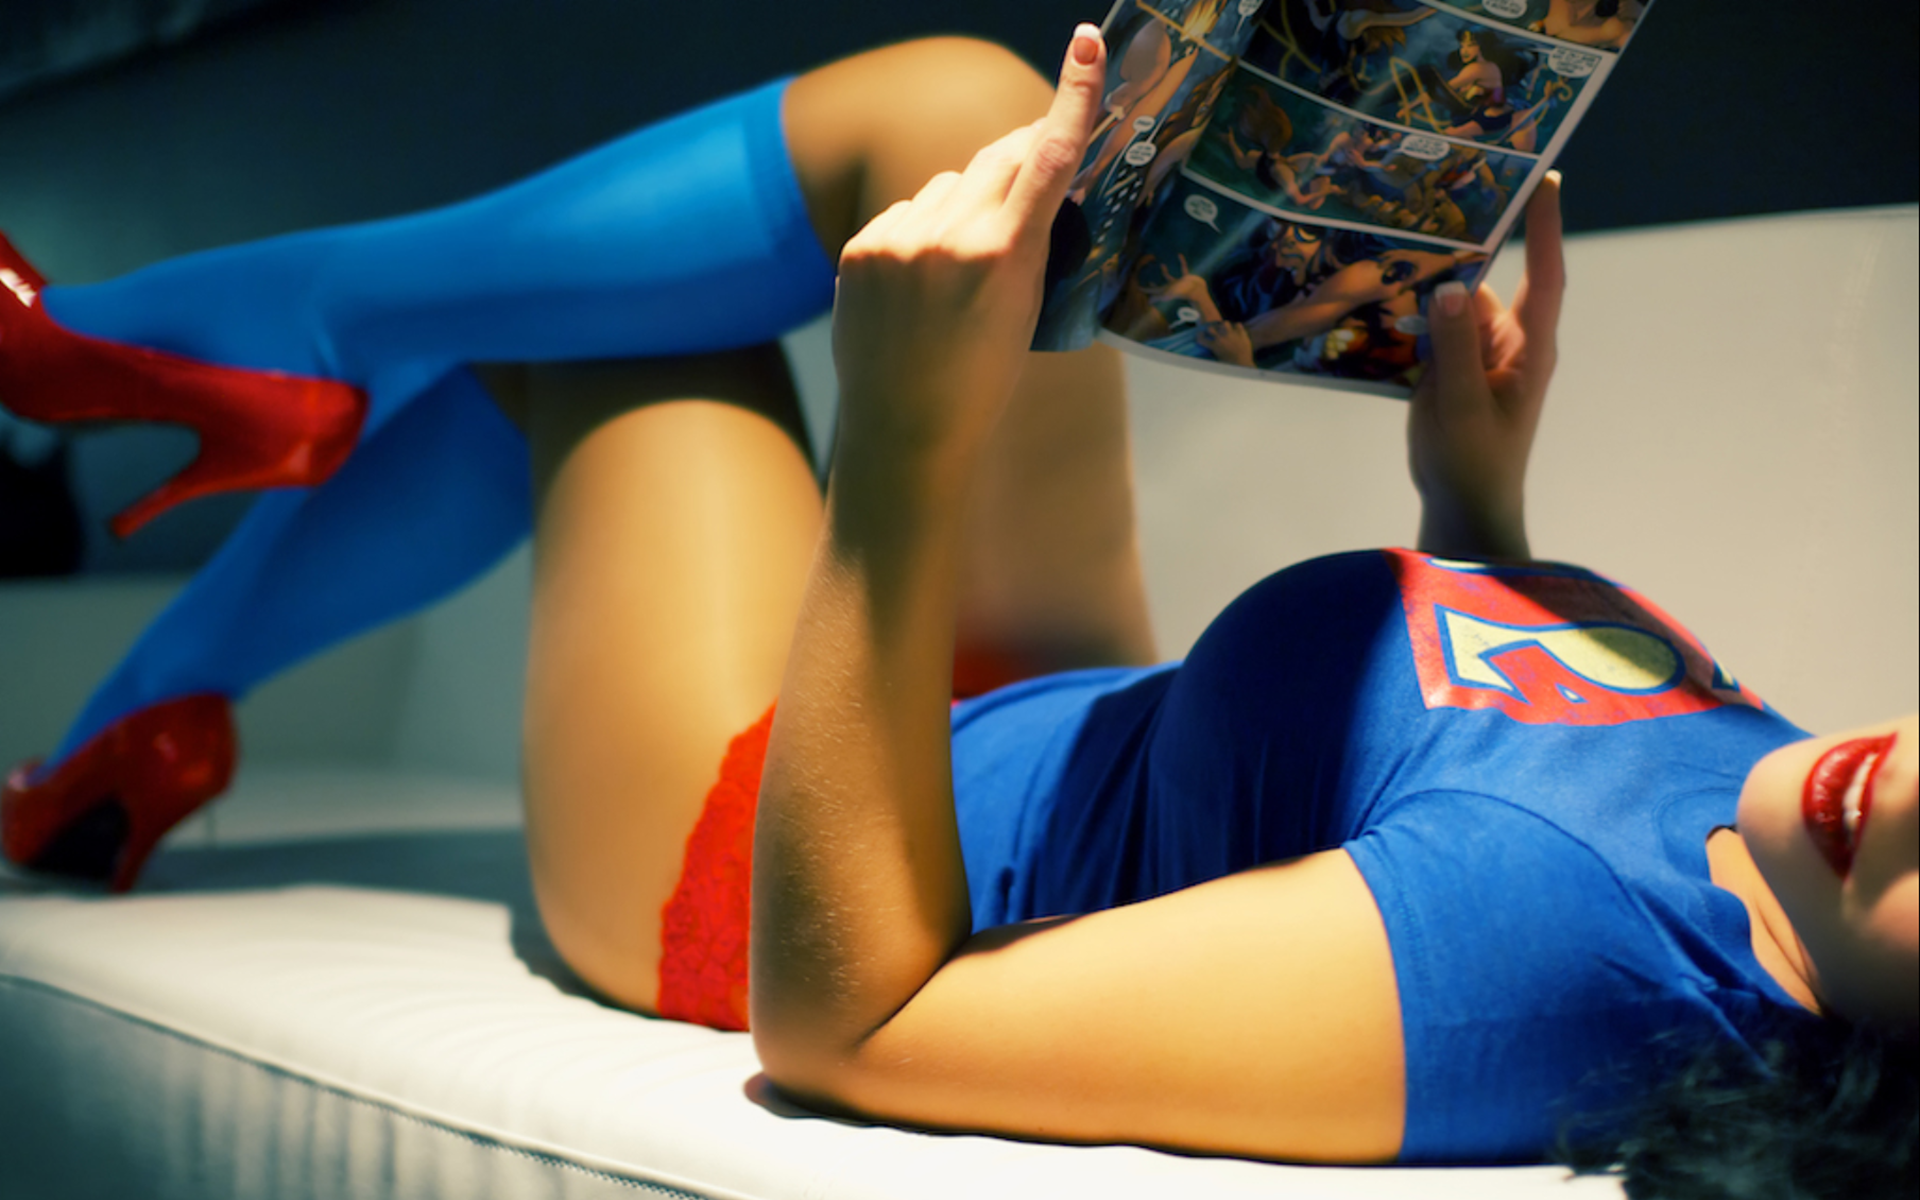 Supergirl enjoys some comics